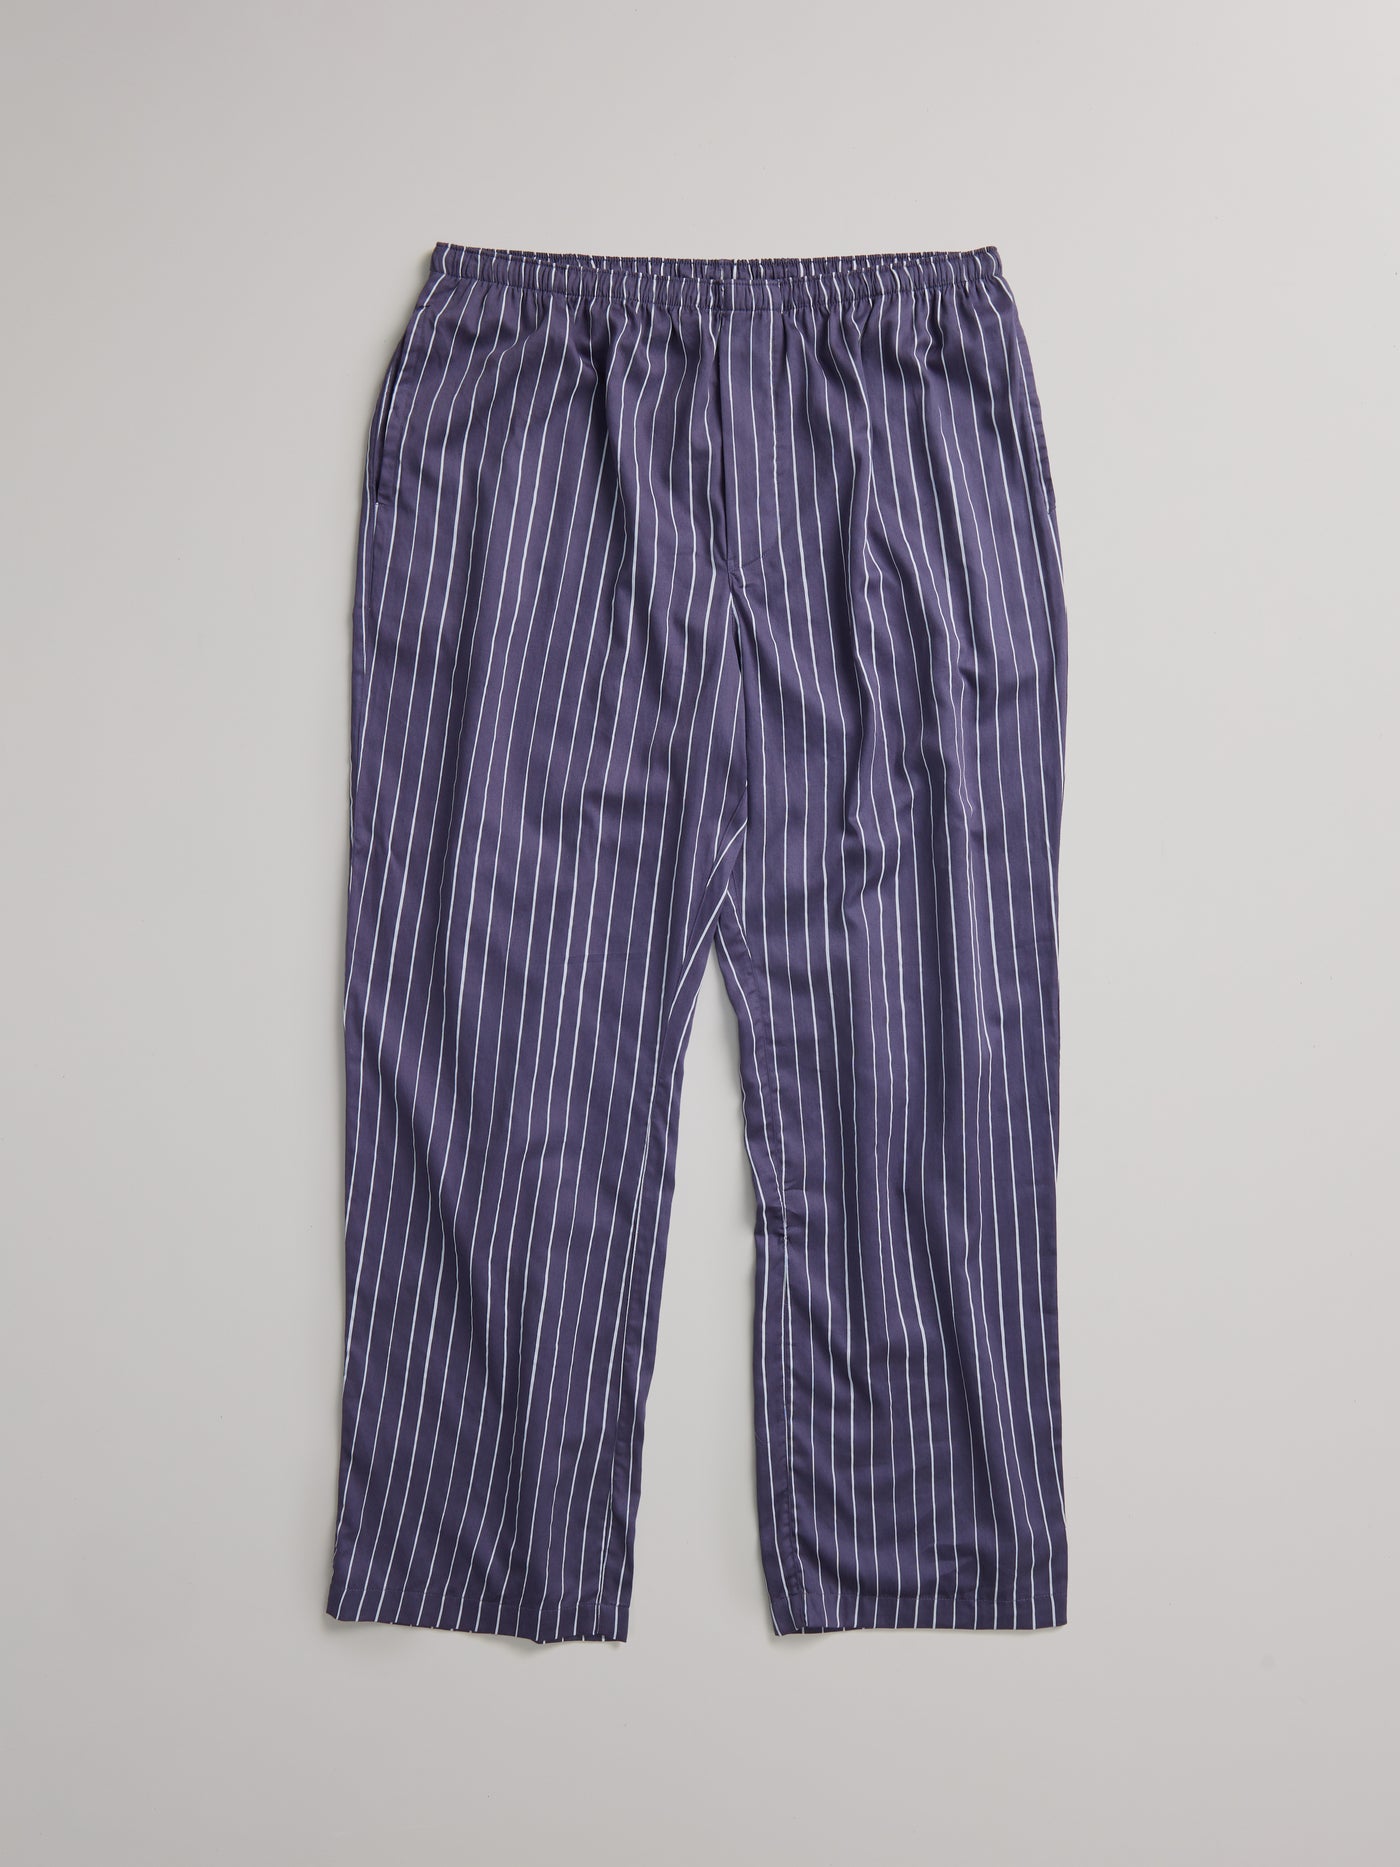 Dark Blue Stripes Mens Pajama